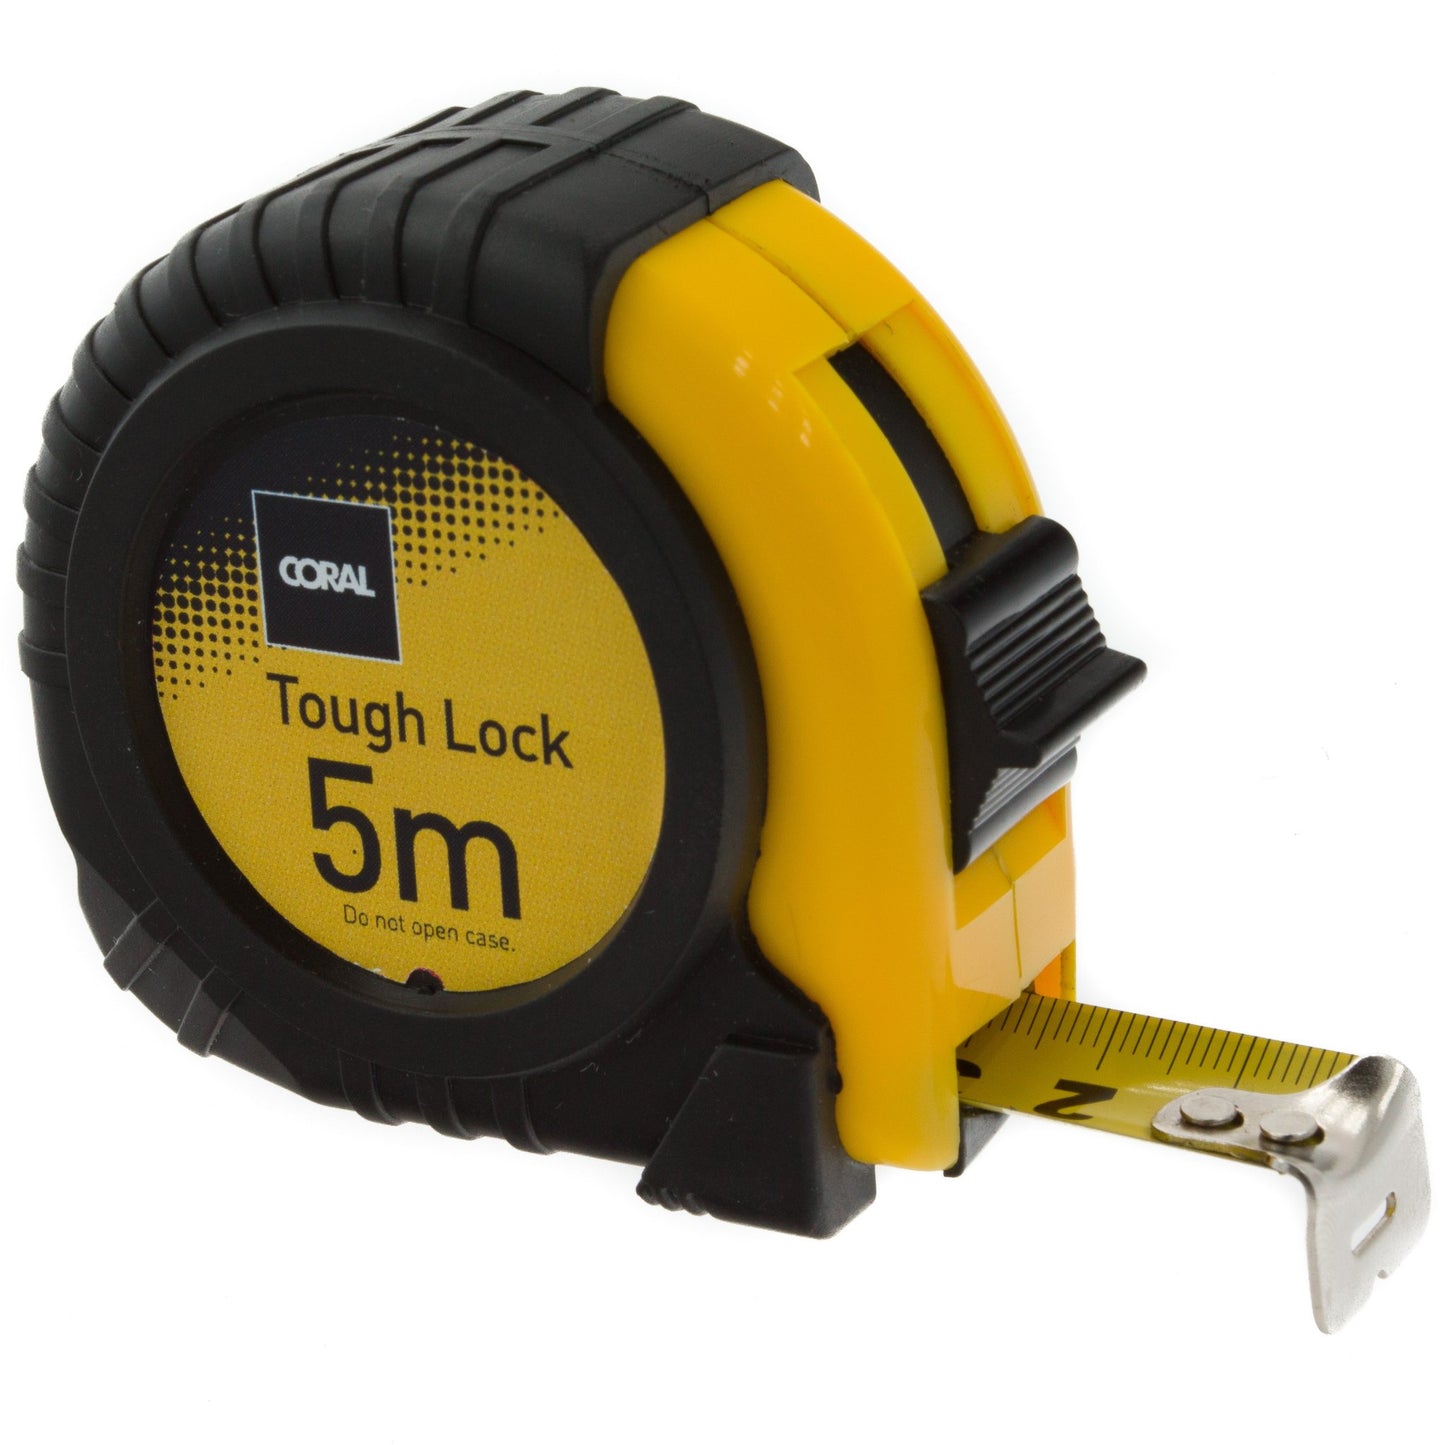 Tough Lock Tape Measure 5m